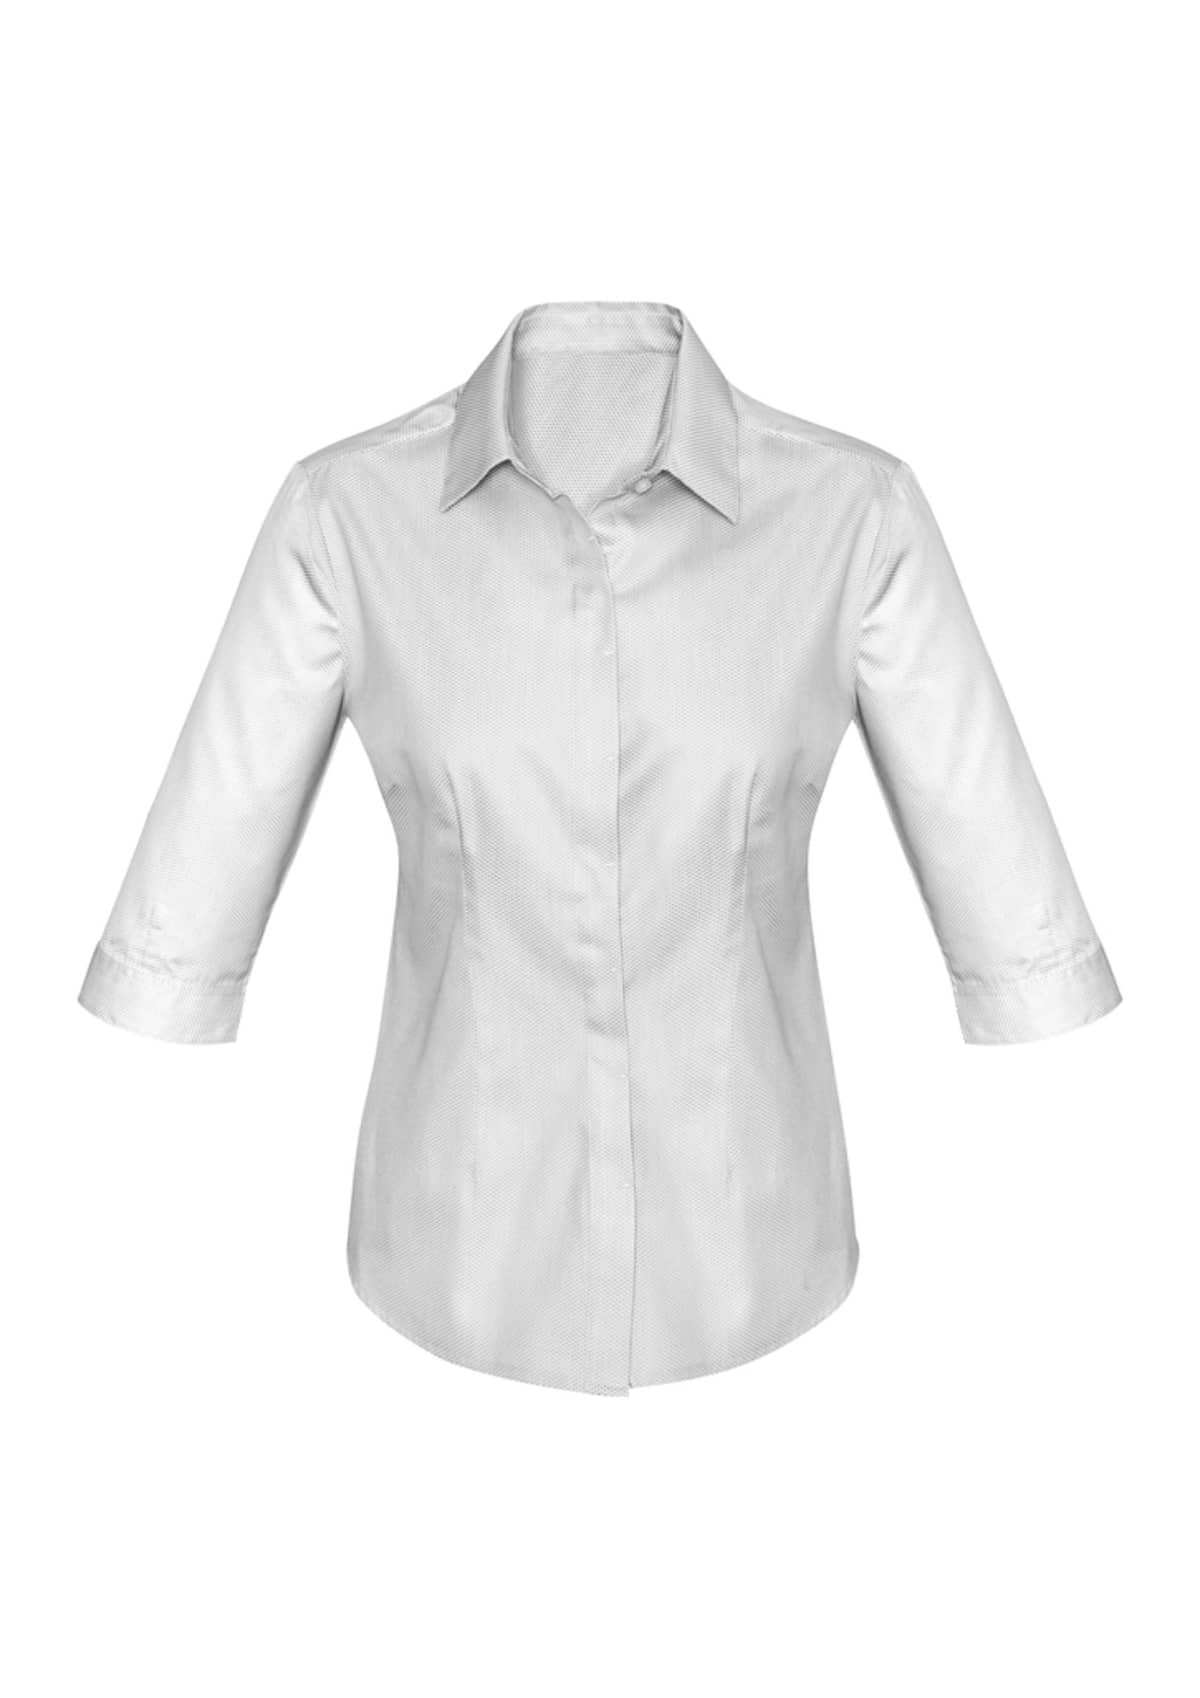 Ladies Stirling 3/4 Sleeve Shirt